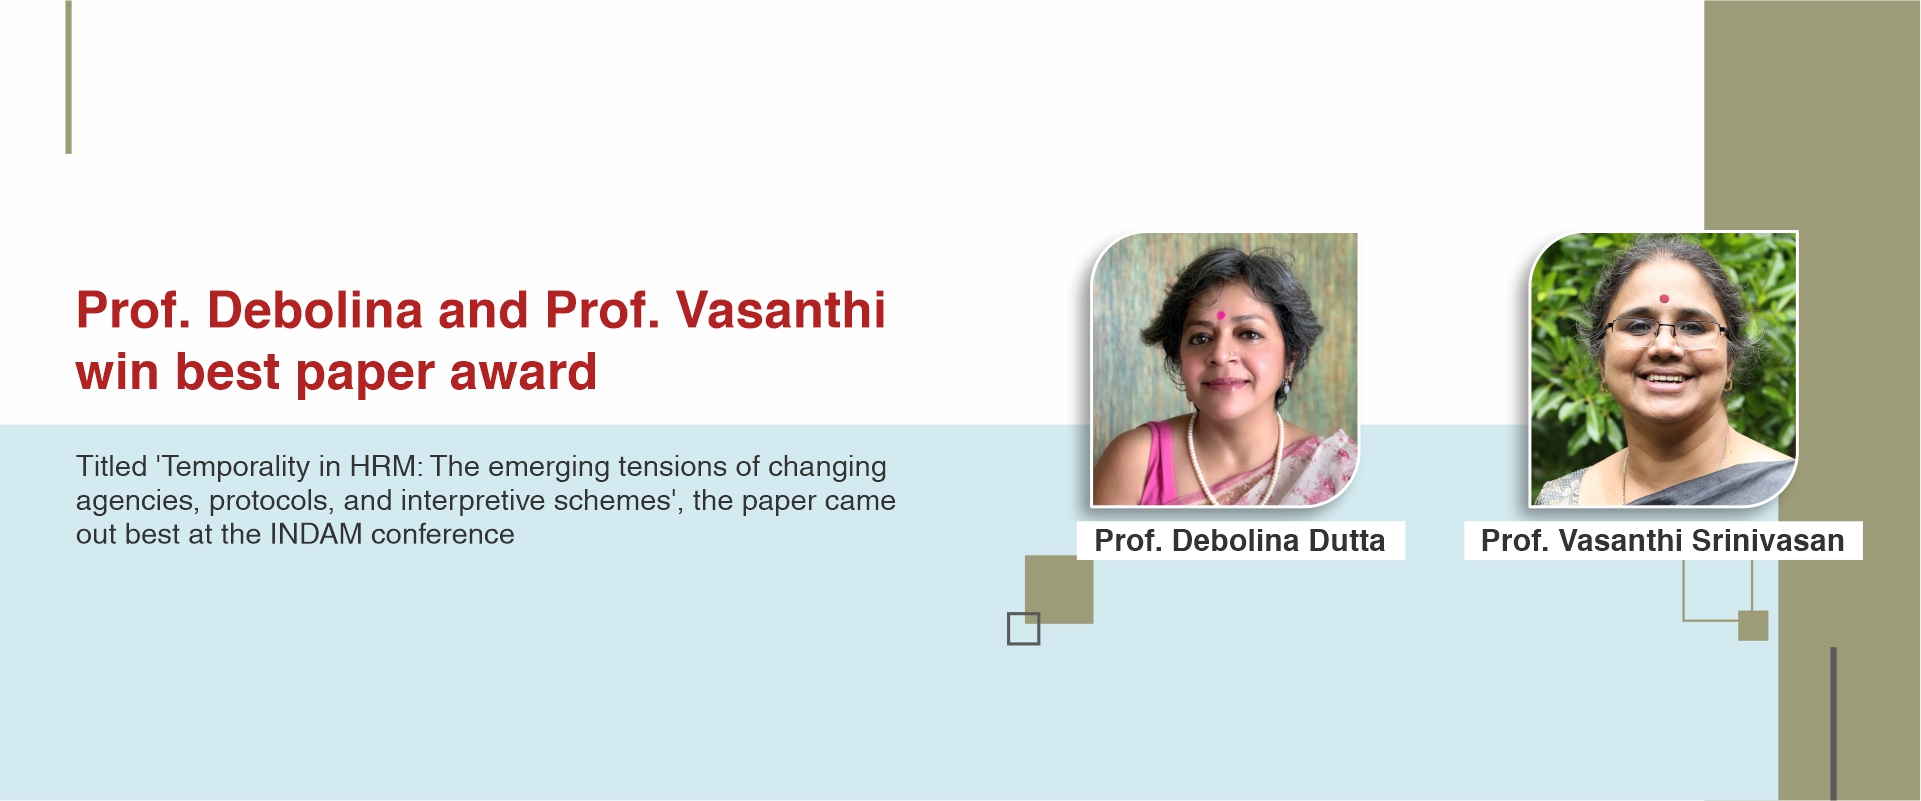 Prof. Debolina and Prof. Vasanthi win best paper award